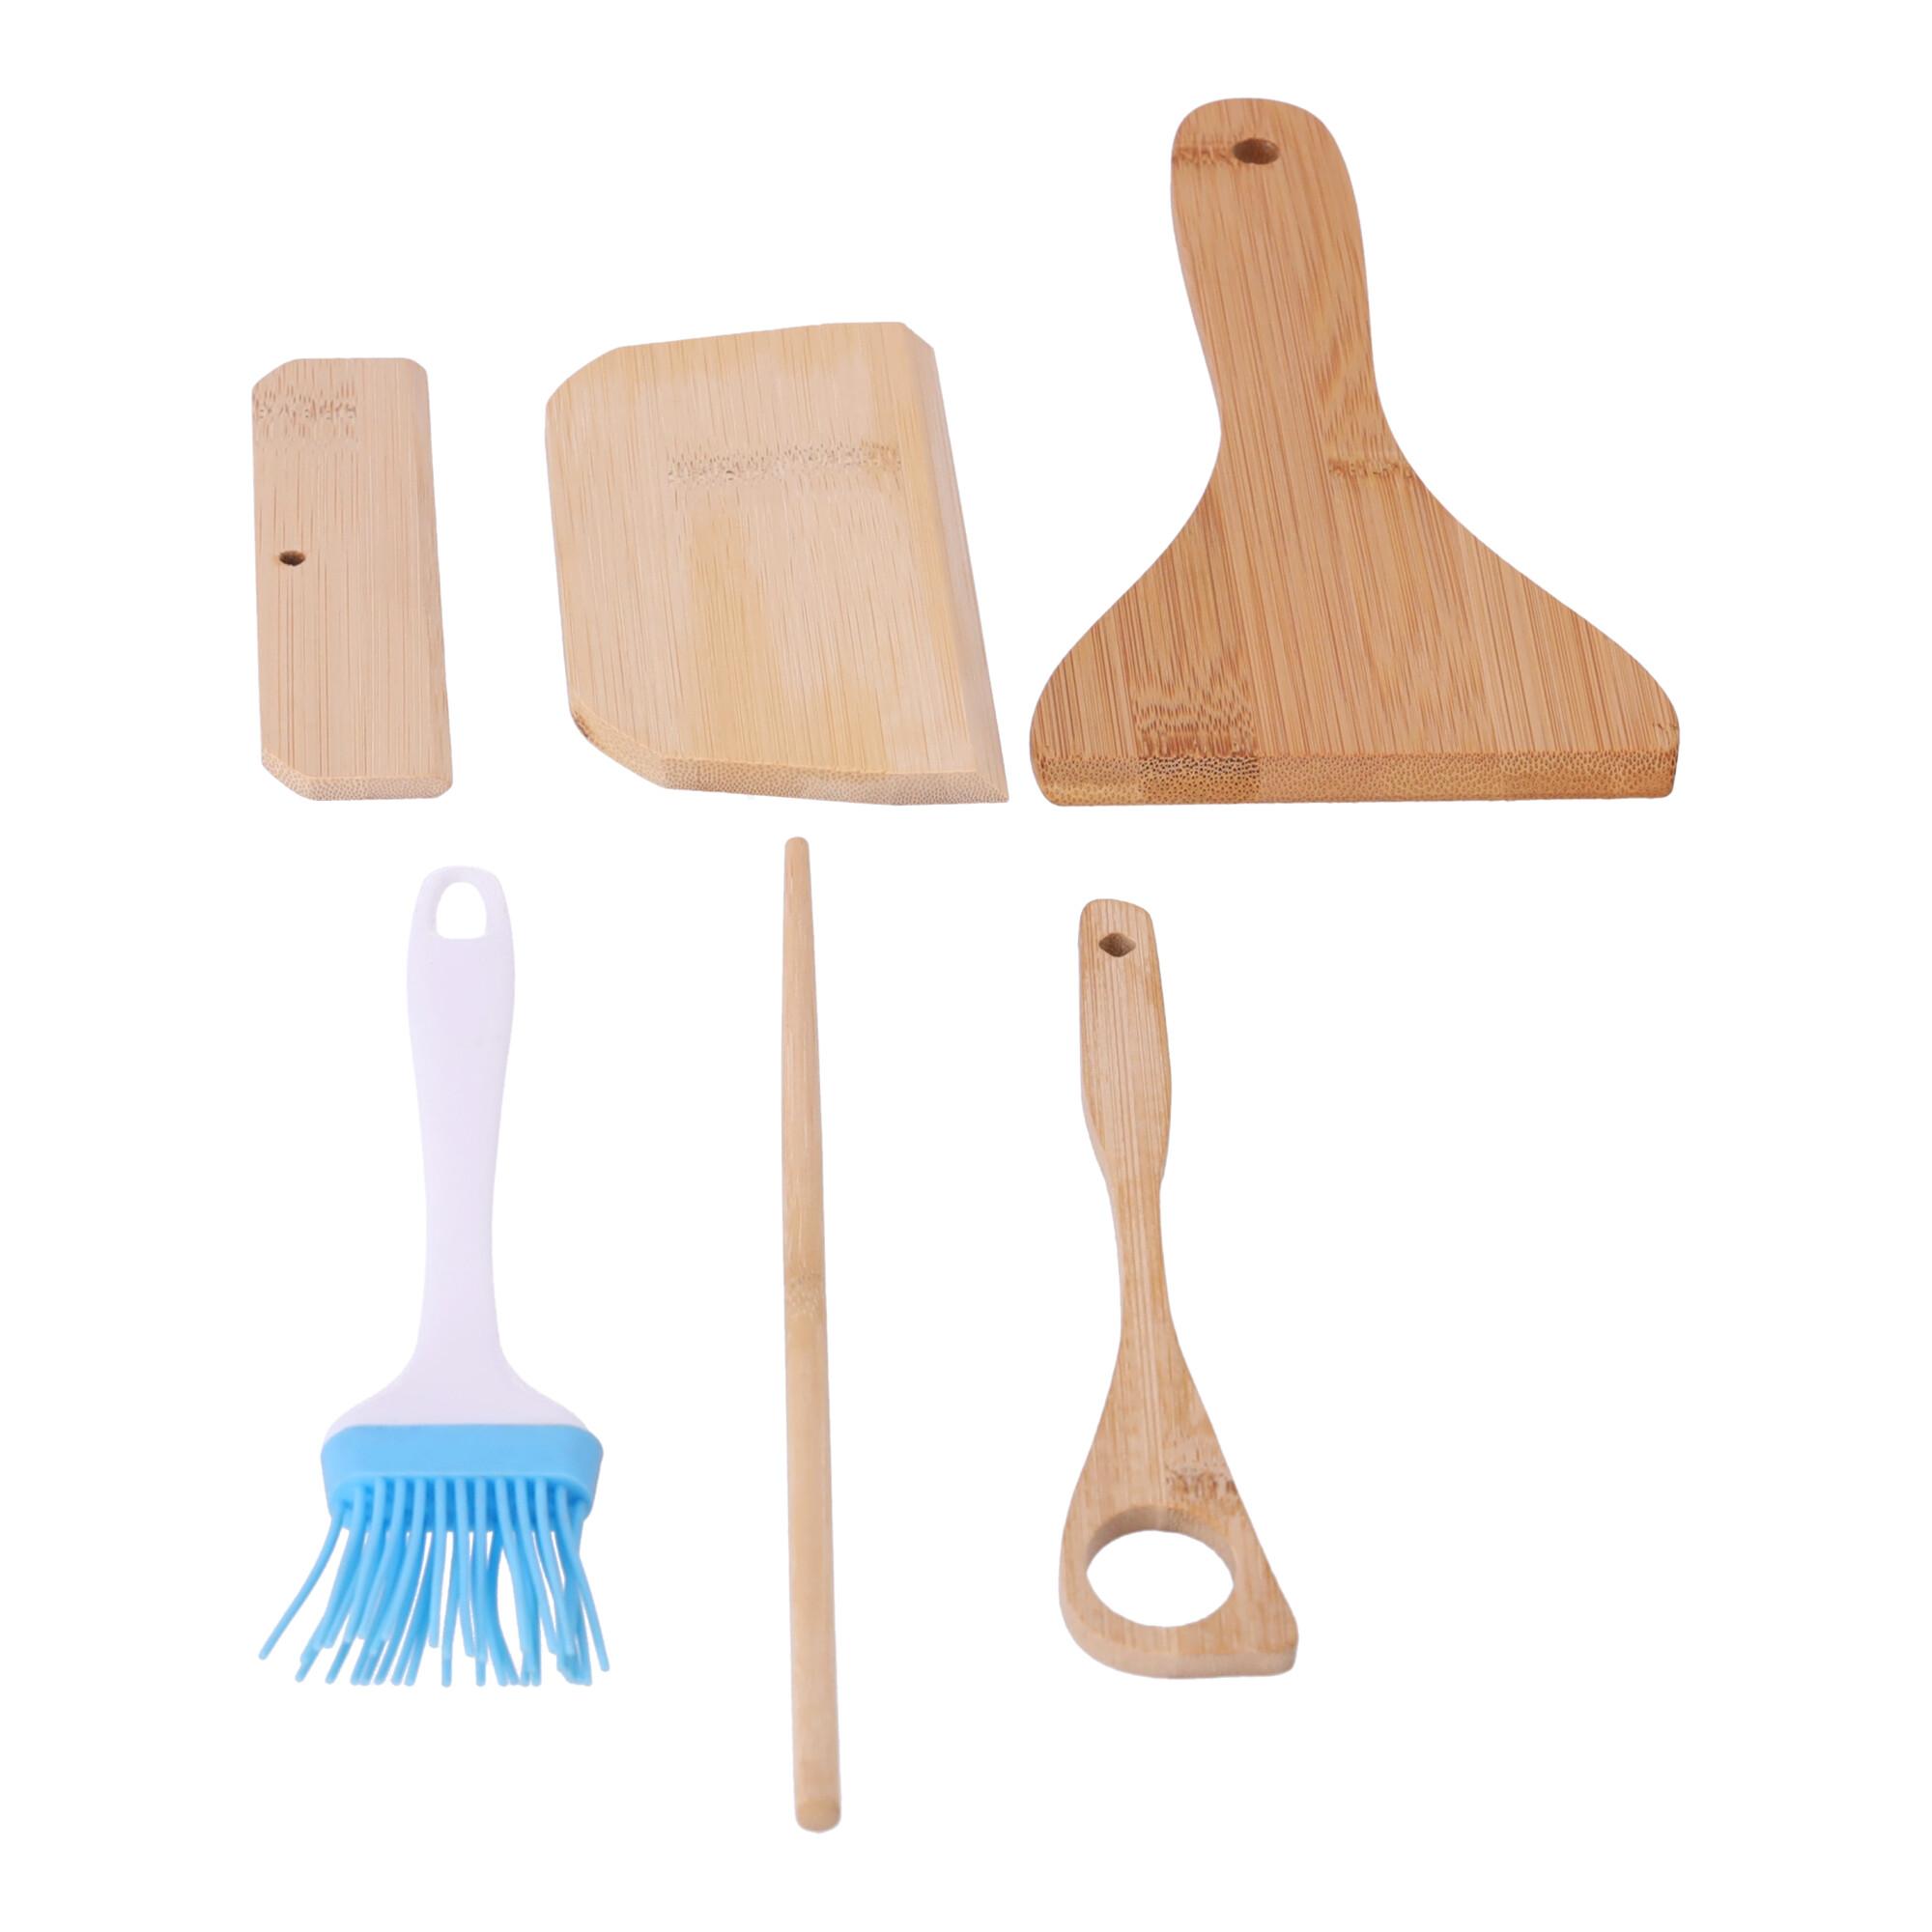 Set of kitchen utensils for preparing pancakes